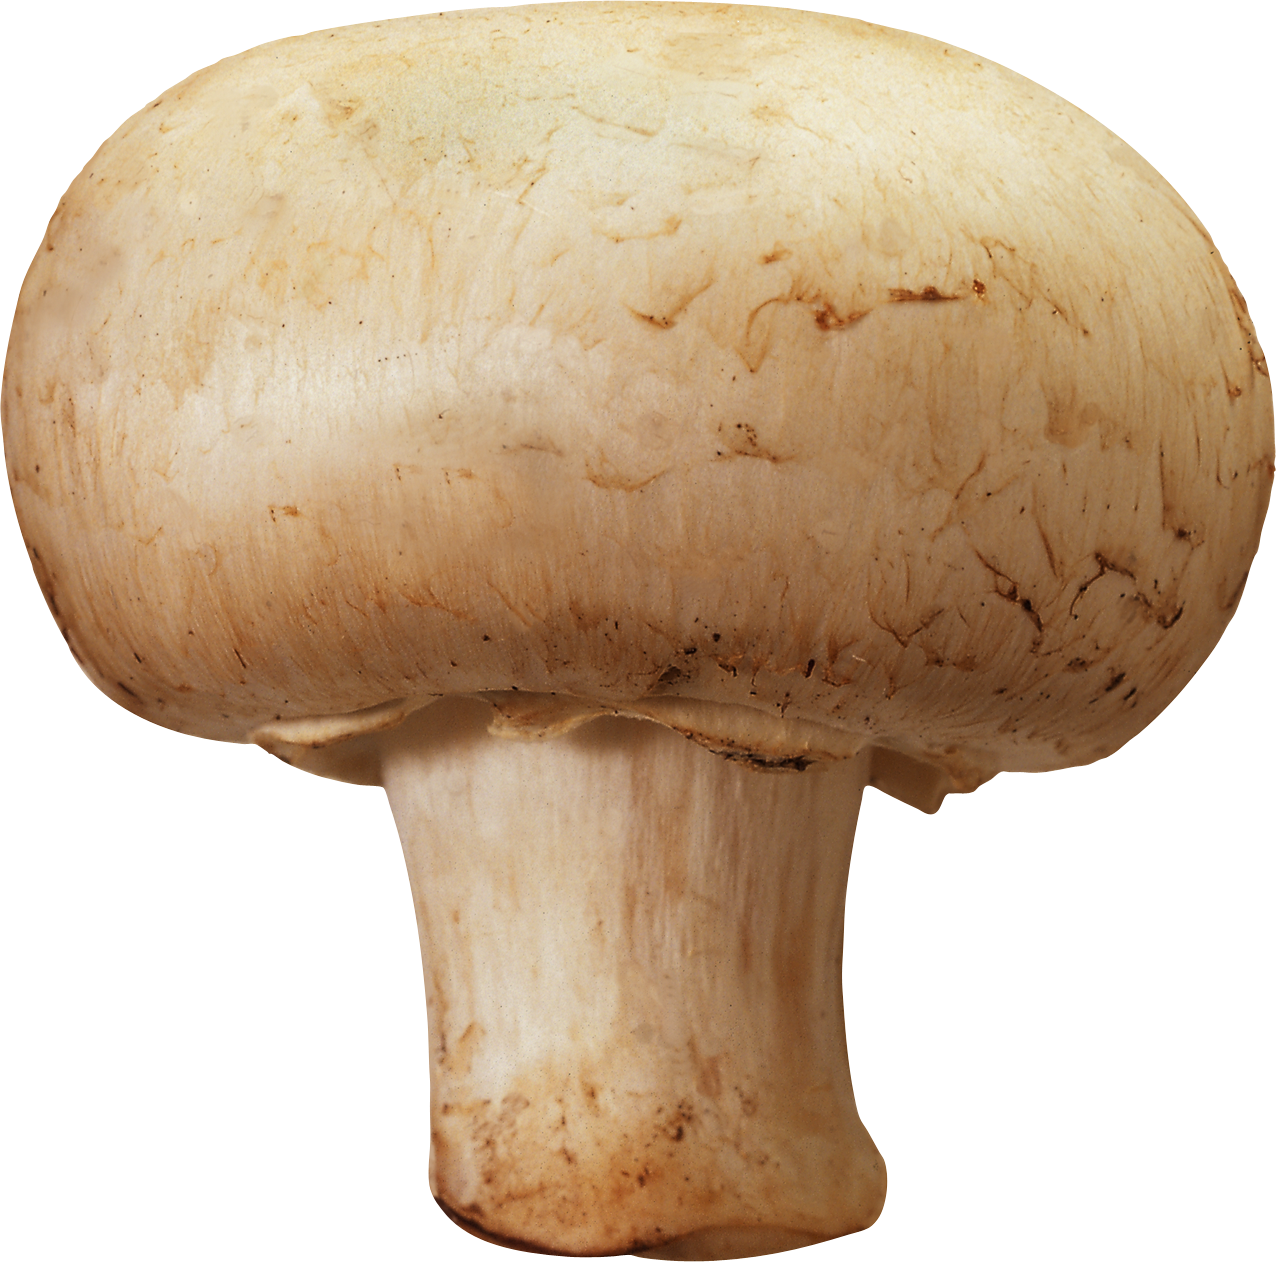 Images of Mushroom | 1276x1262